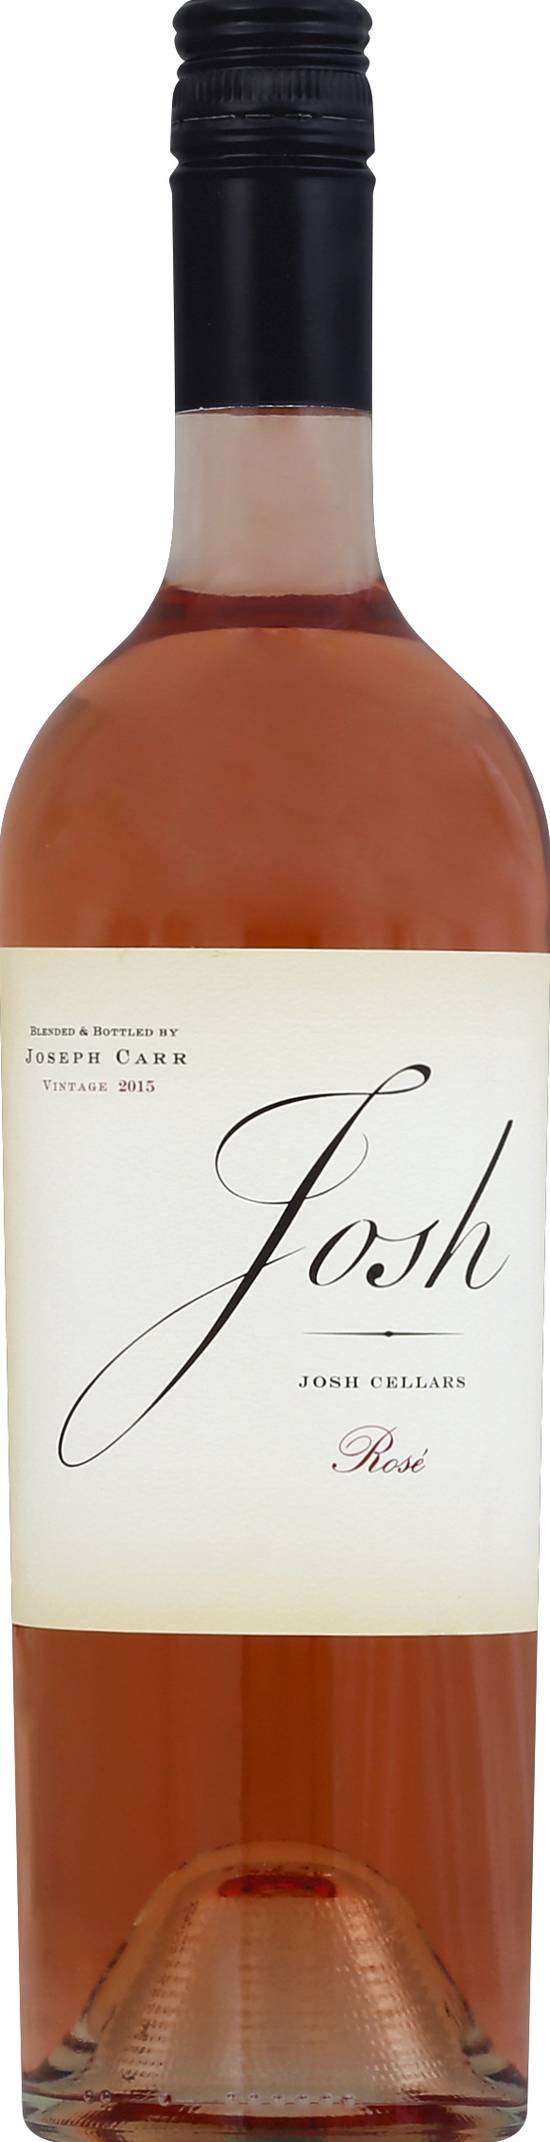 Josh Cellars Joseph Carr Rose Wine 2015 (750 ml)